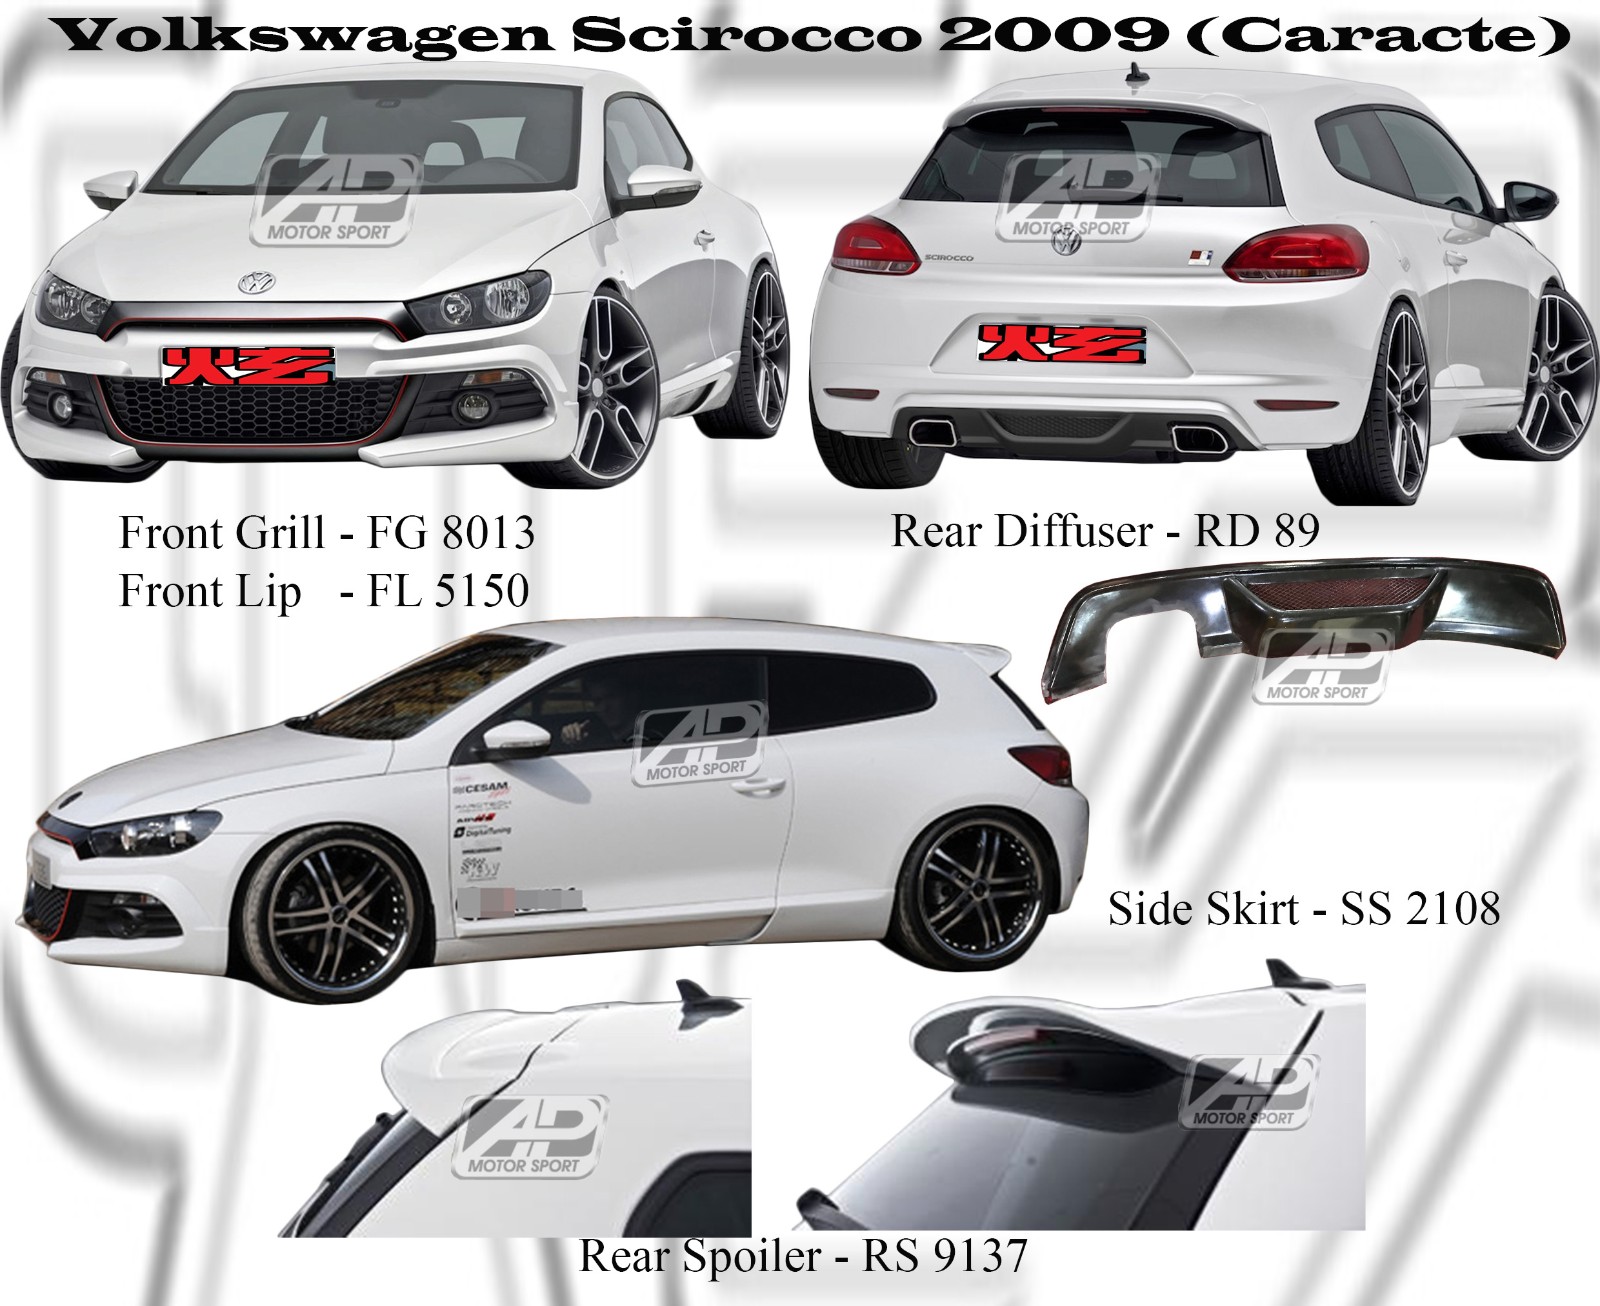 Volkswagen Scirocco Carac Style Bodykits 